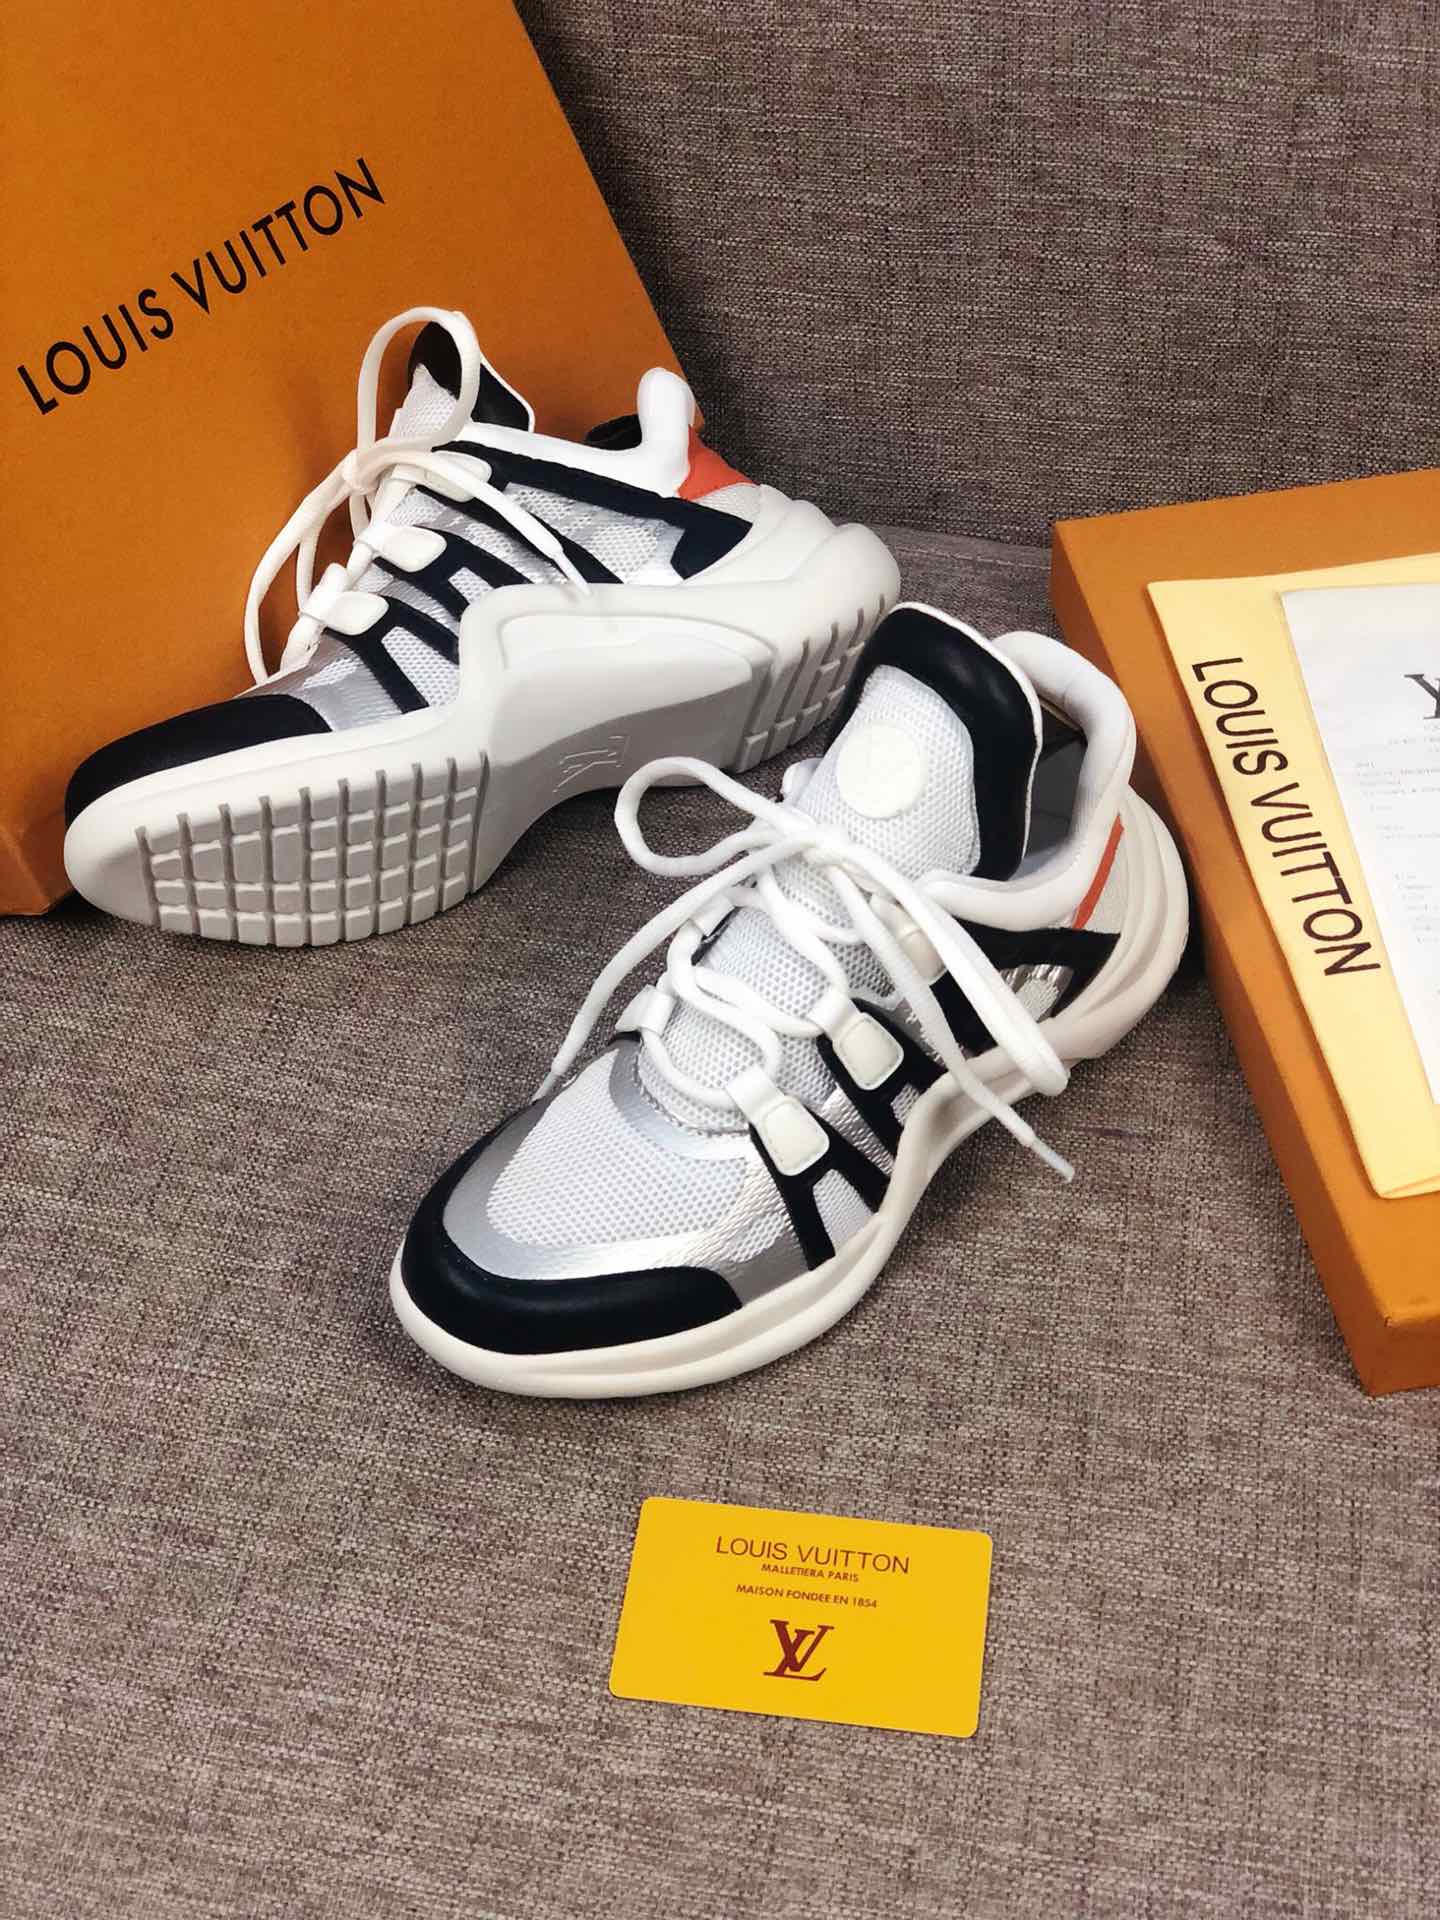 PT - LUV Archlight White Black Orange Sneaker